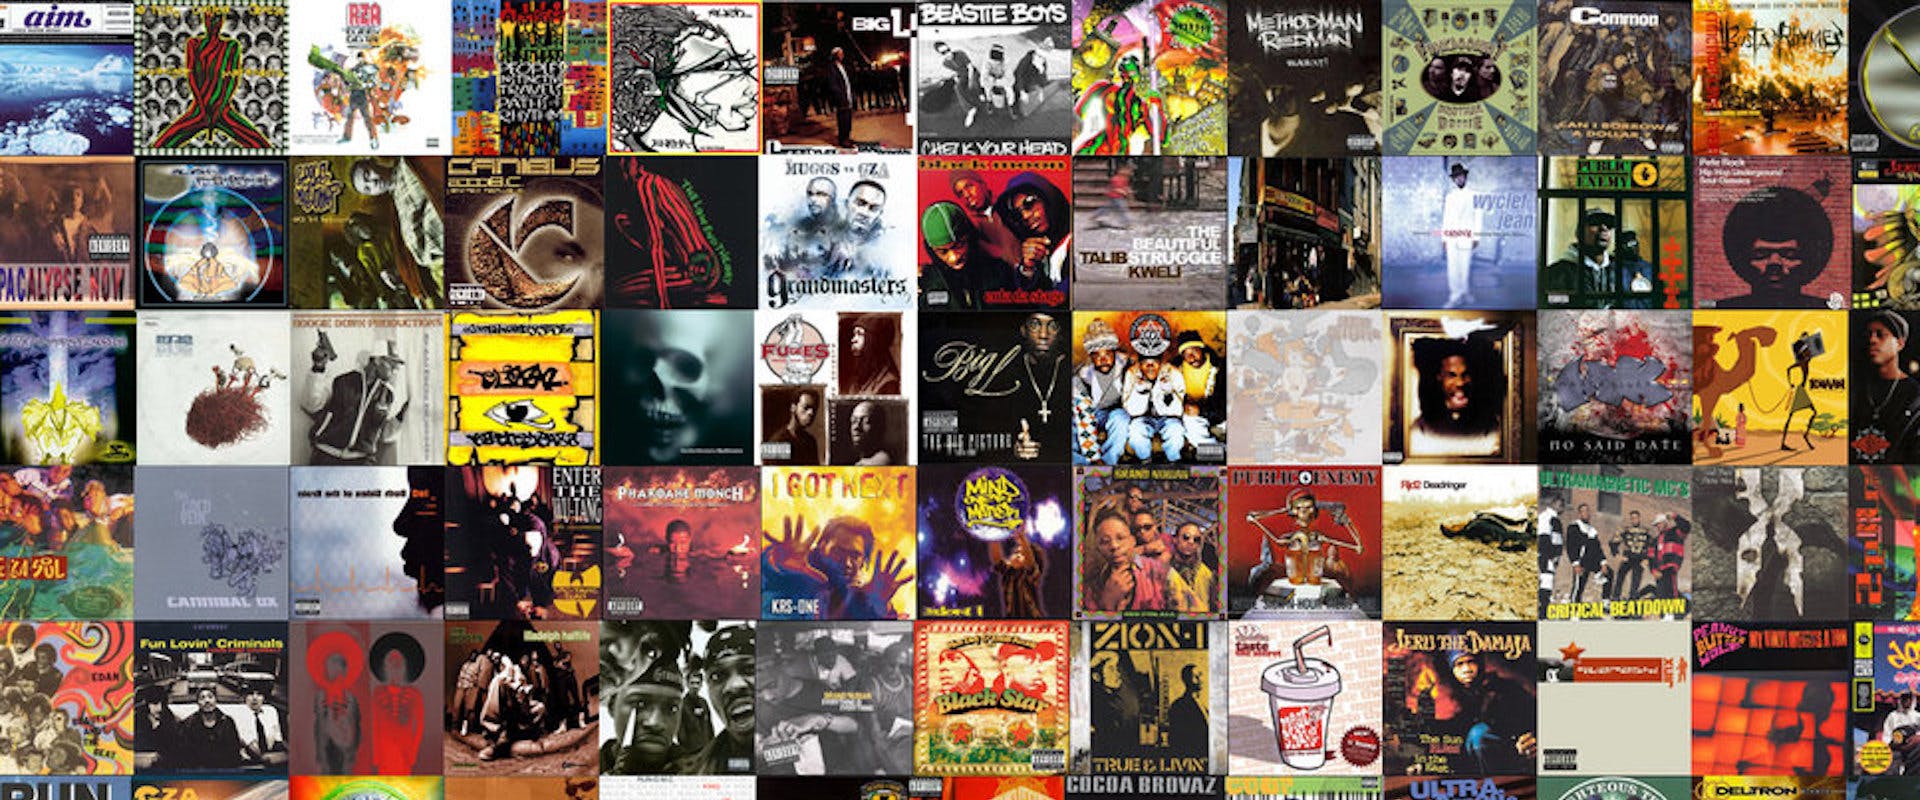 Hvor Recite bifald Reactions To Rolling Stone's 200 Greatest Rap Albums List: "Atrocious"